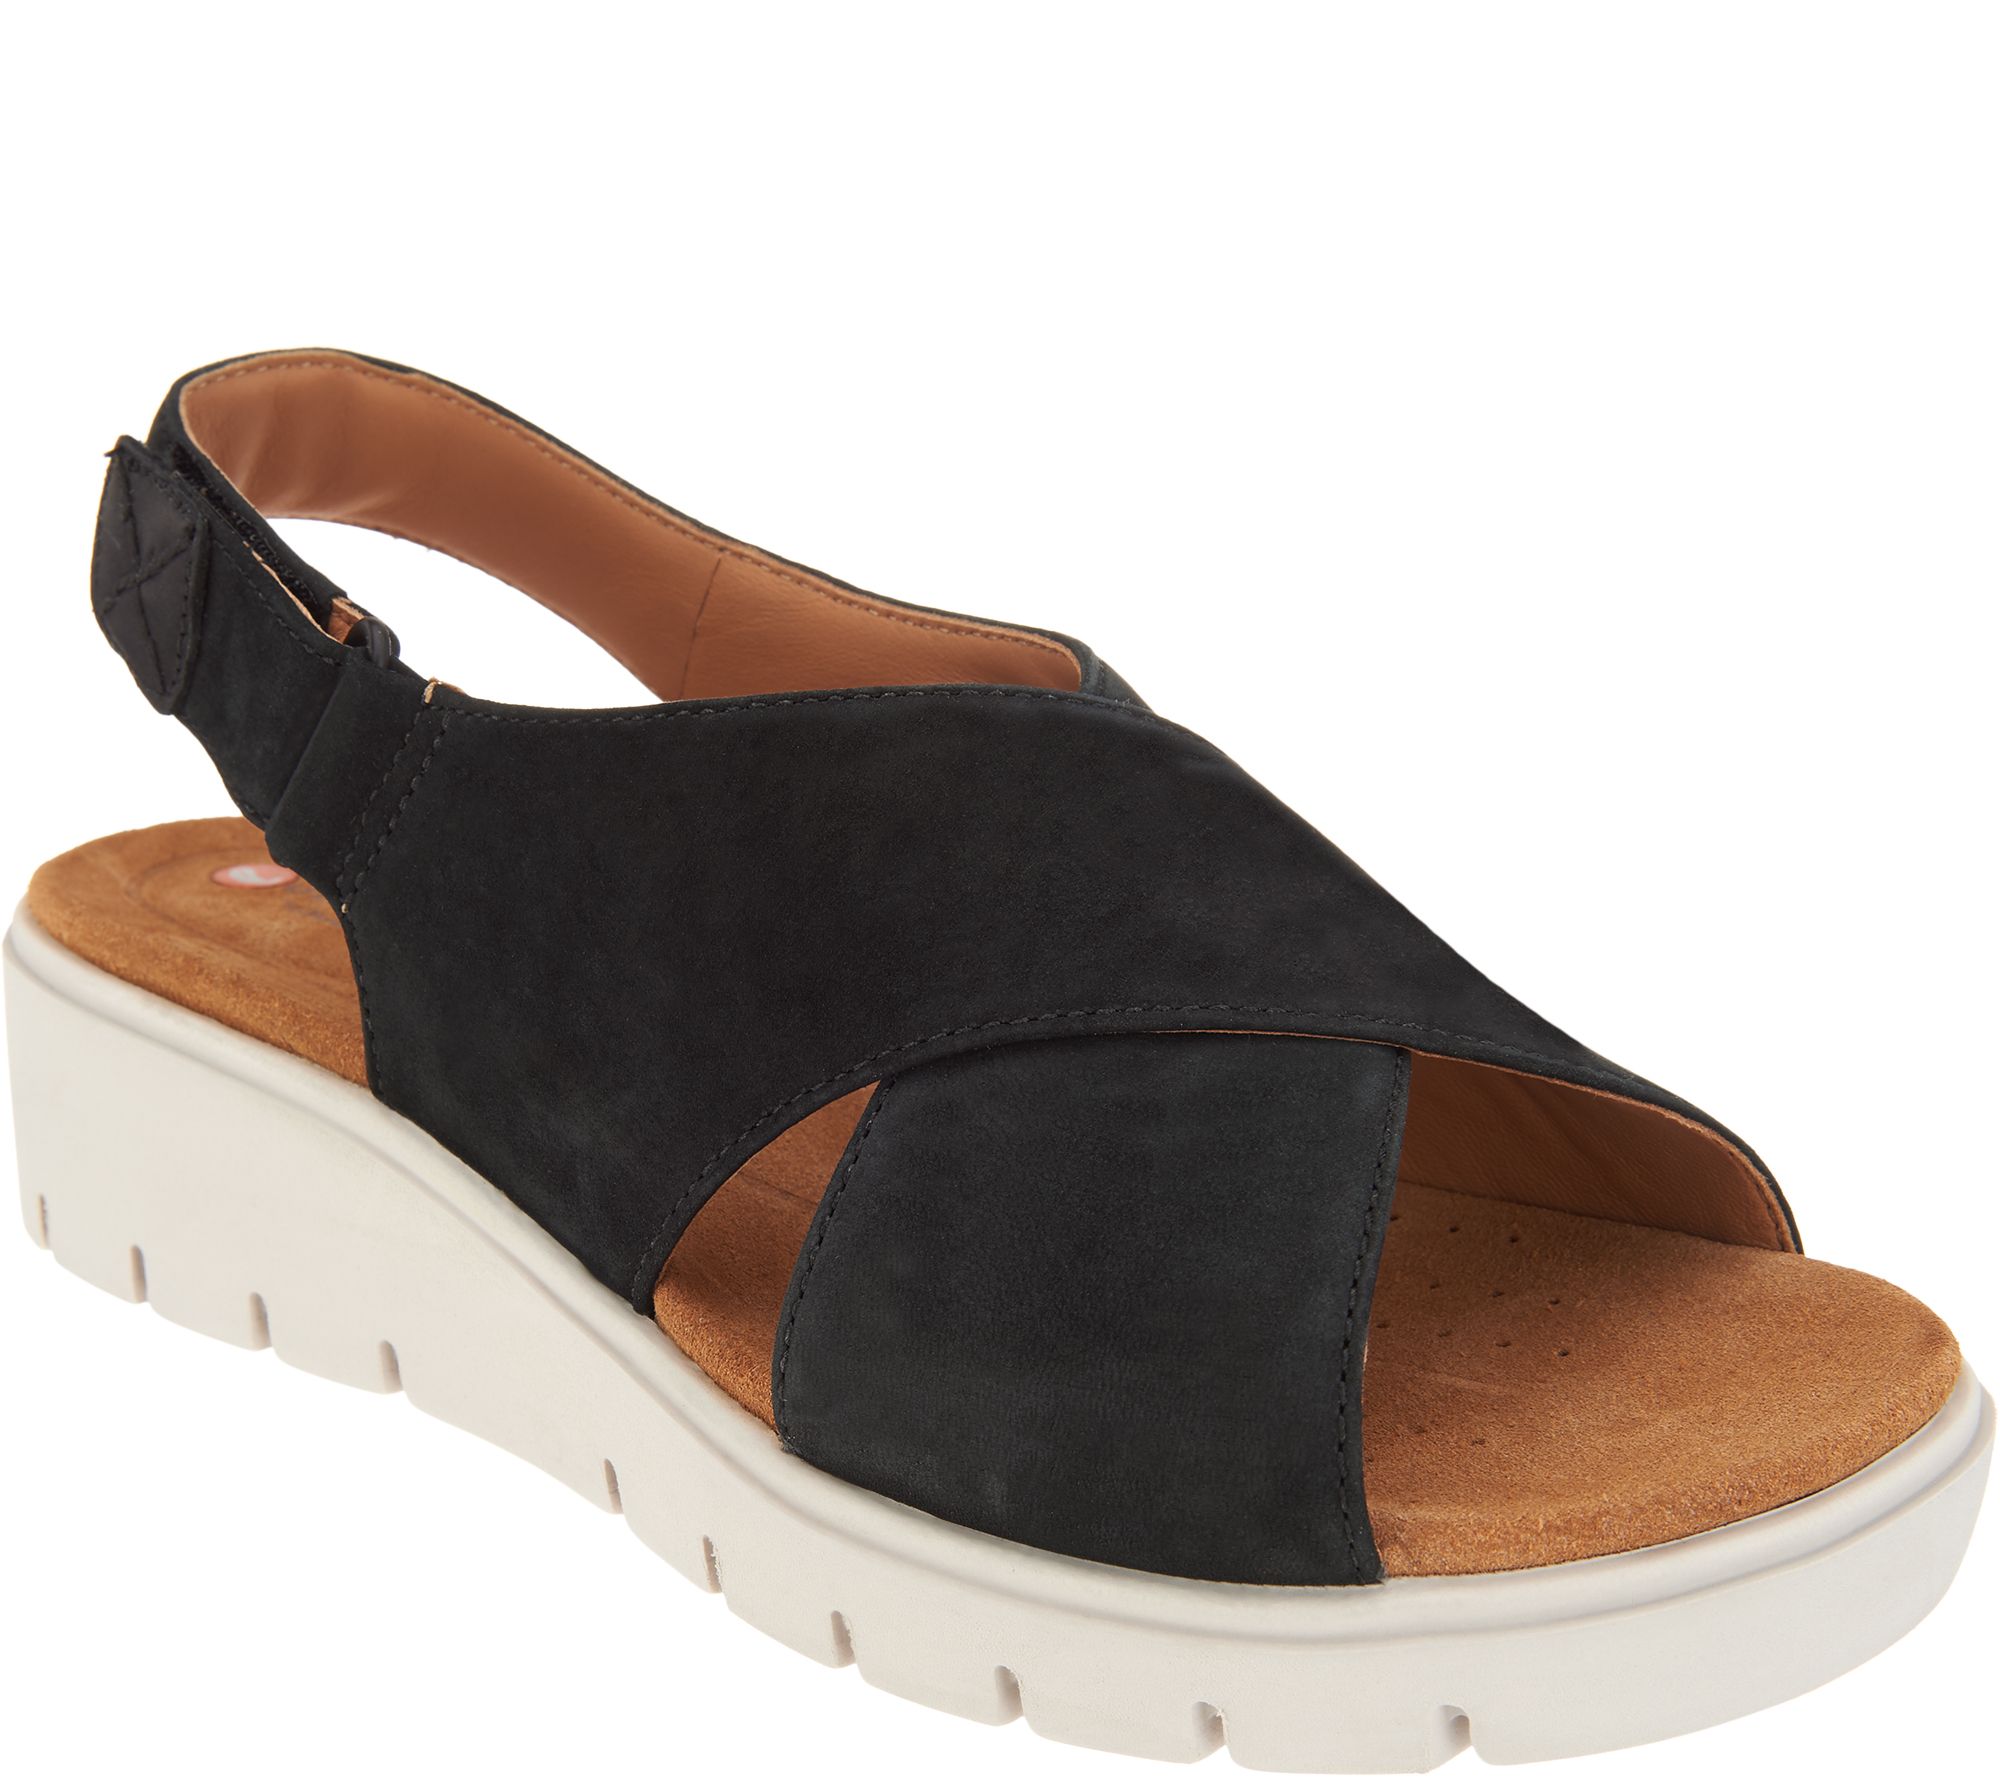 clarks unstructured women's sandals size 5